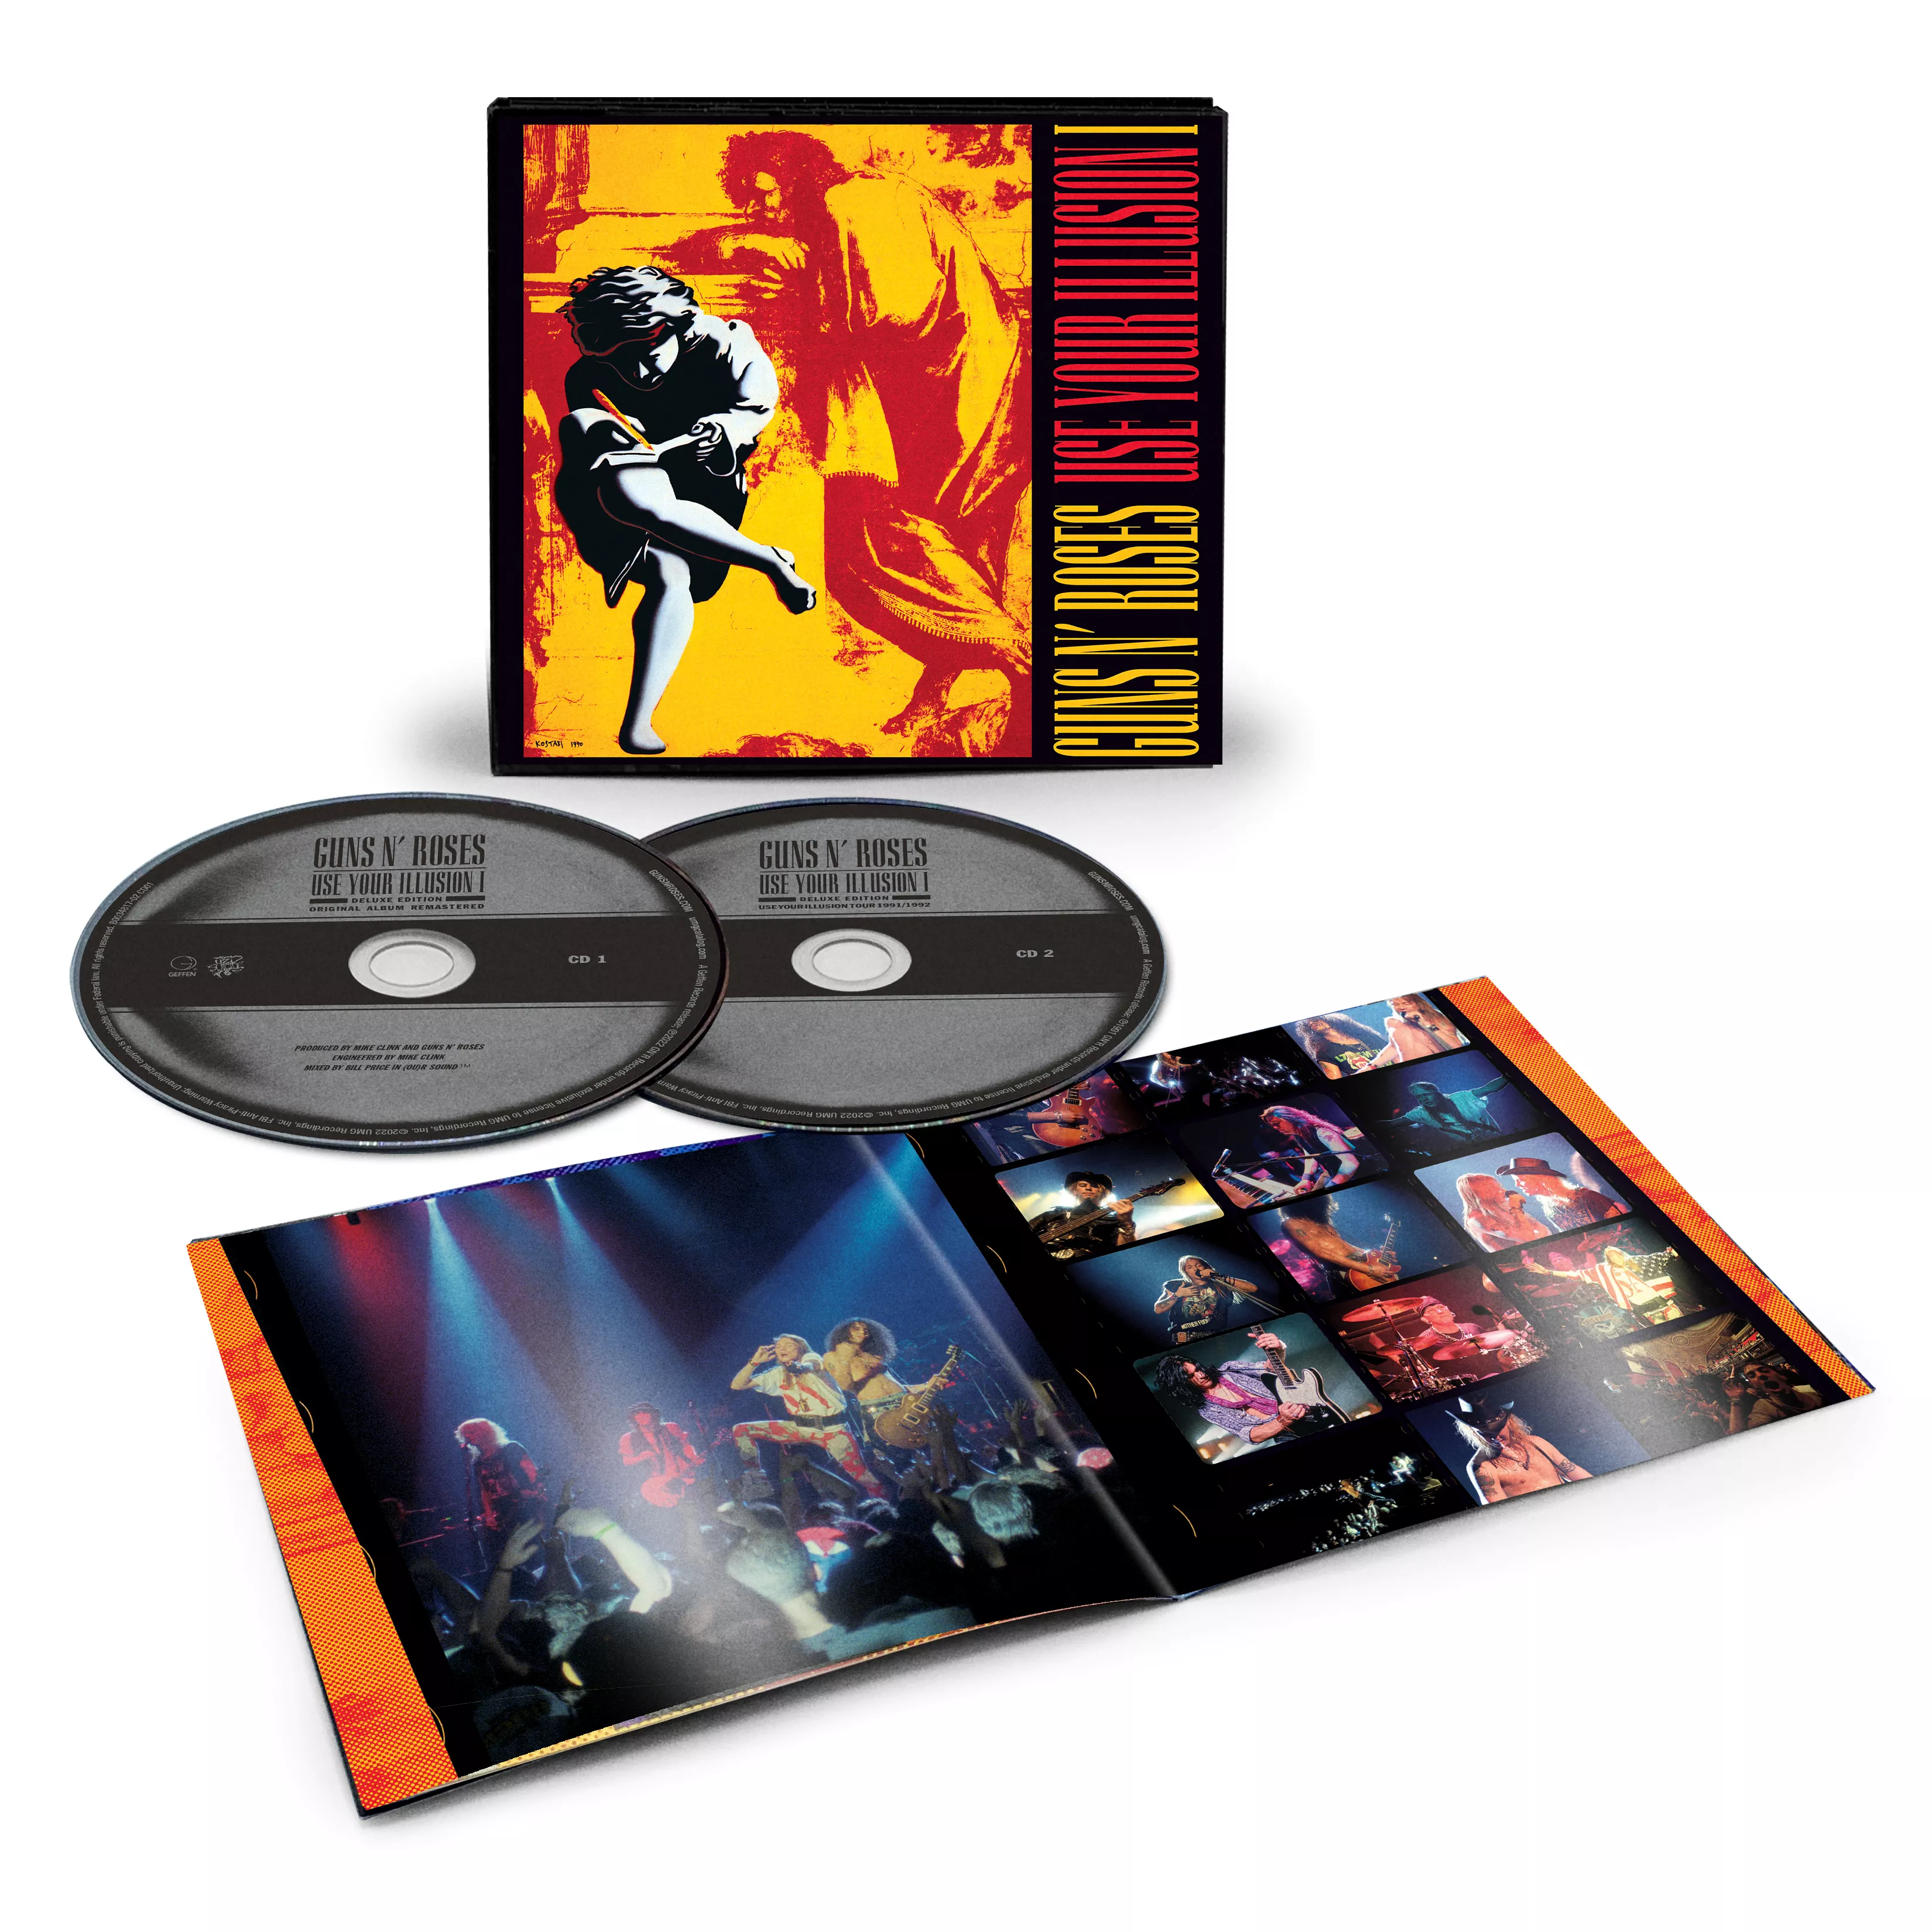 Use Your Illusion I + II (30th Anniversary Box Set) - Guns N' Roses 